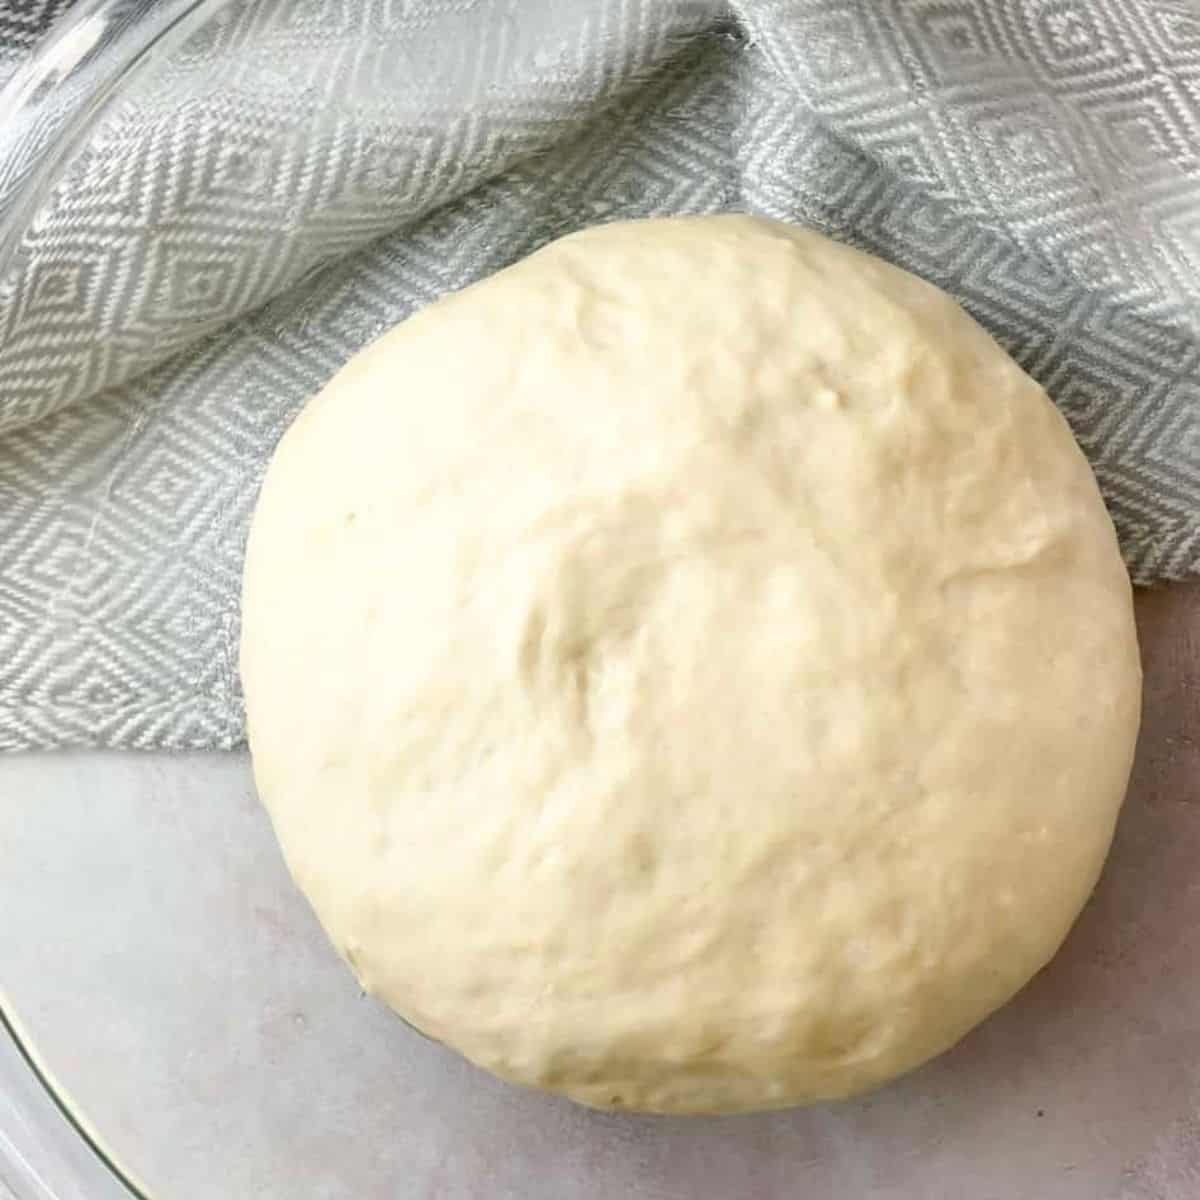 https://tastegreatfoodie.com/wp-content/uploads/2021/01/Ten-Minute-All-Purpose-Dough.jpg